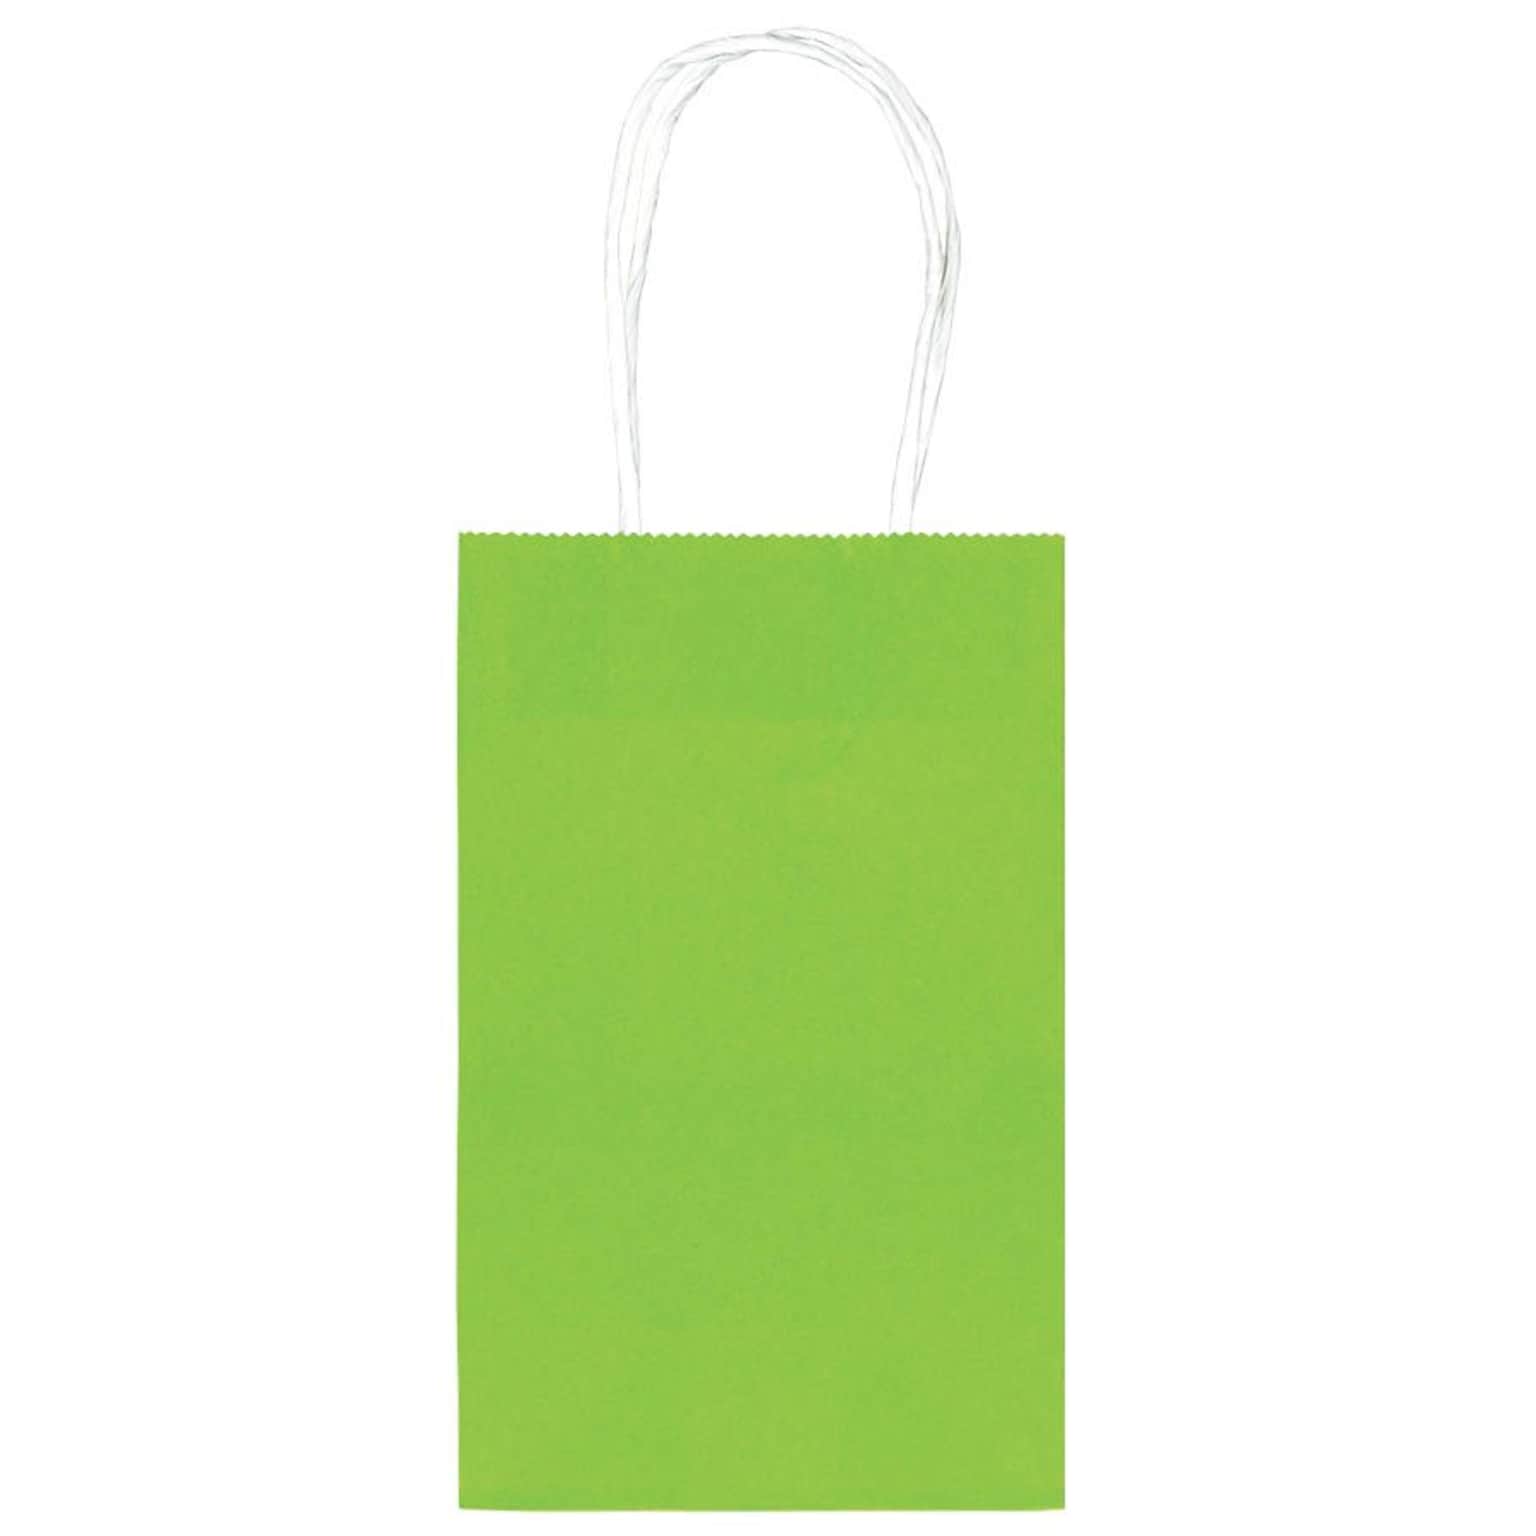 Amscan Cub Bags Value Pack, Kiwi, 4 Bags/Pack (162500.53)